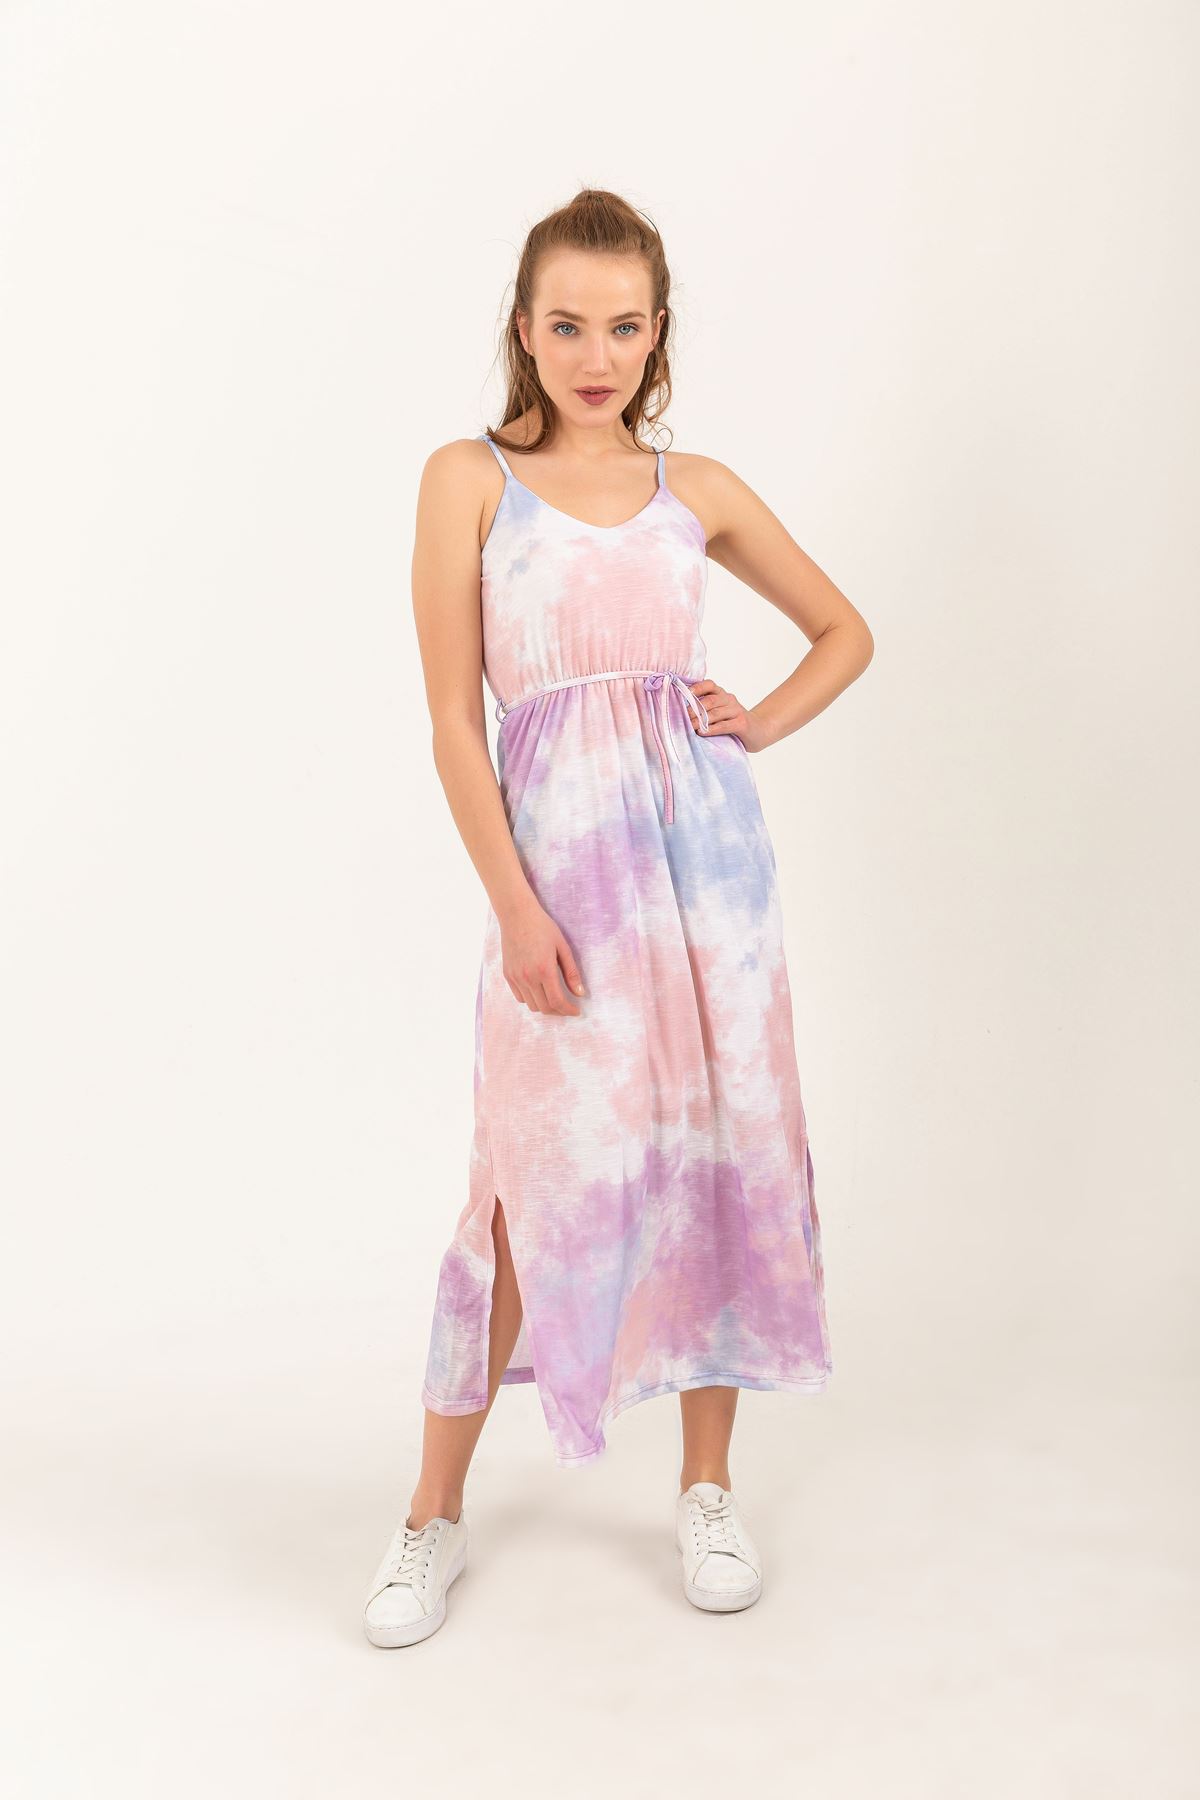 Single Jersey Fabric Spaghetti Comfy Fit Batik Pattern Women Dress - Lilac